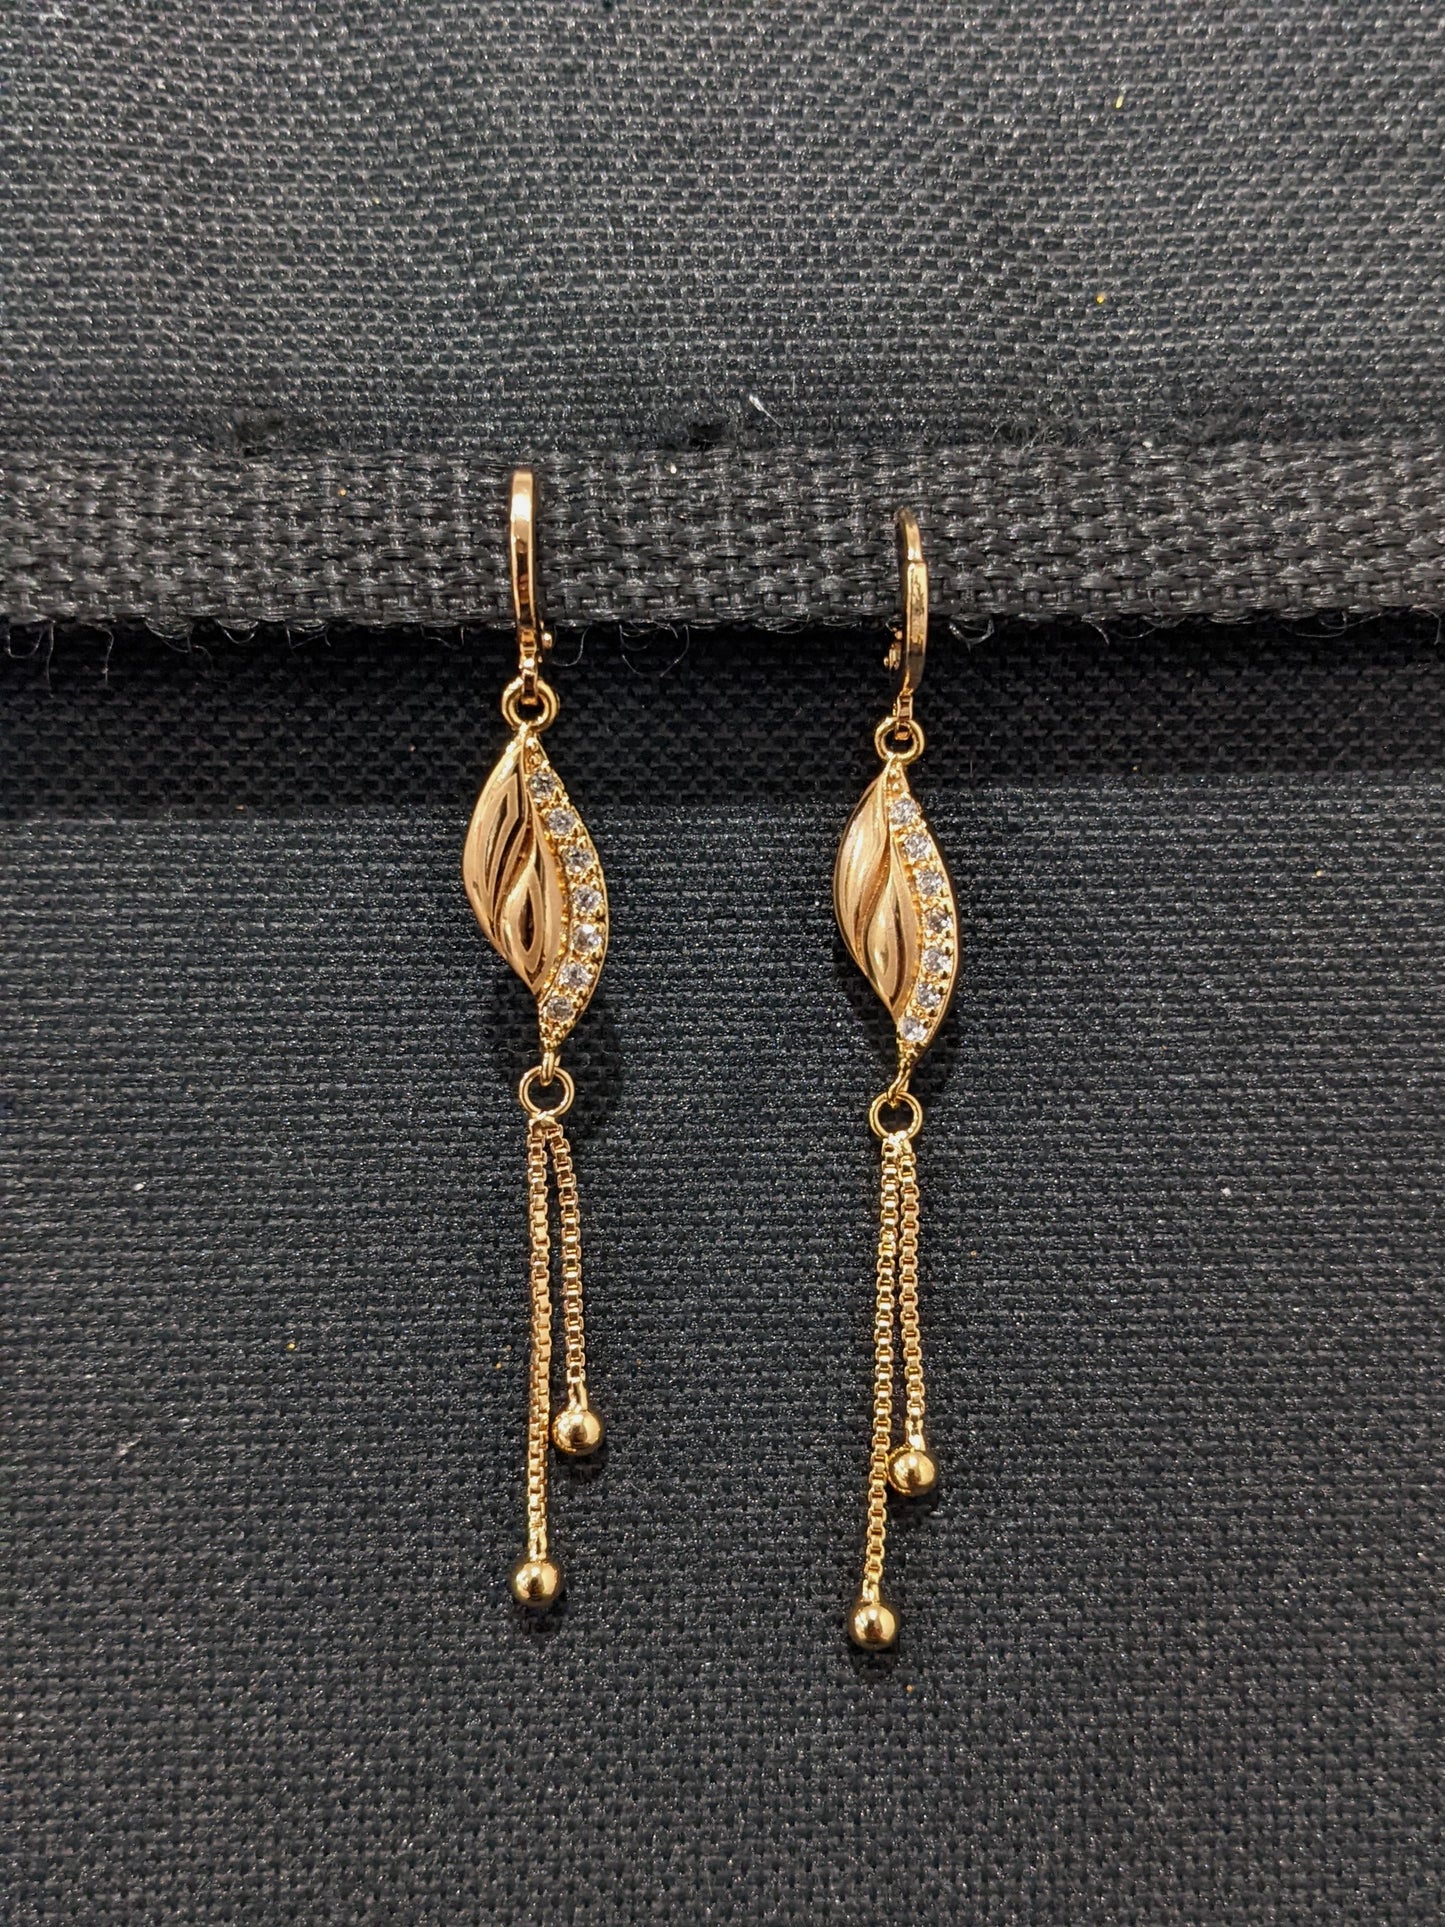 Dual Leaf design ring style long dangle CZ earrings